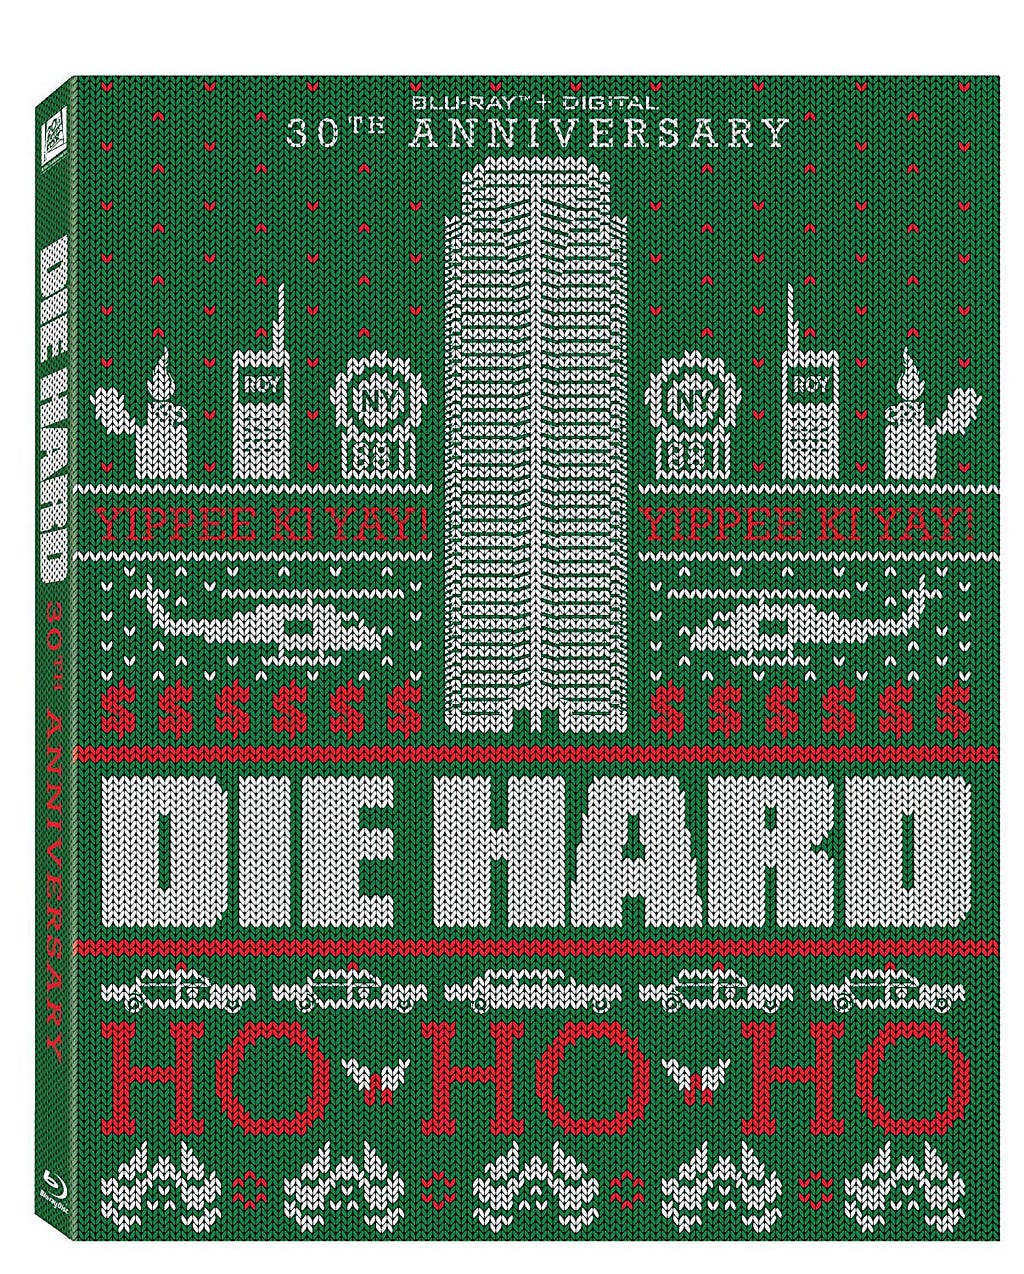 Die Hard Movie 30th Anniversary Box Set which has a Christmas Theme